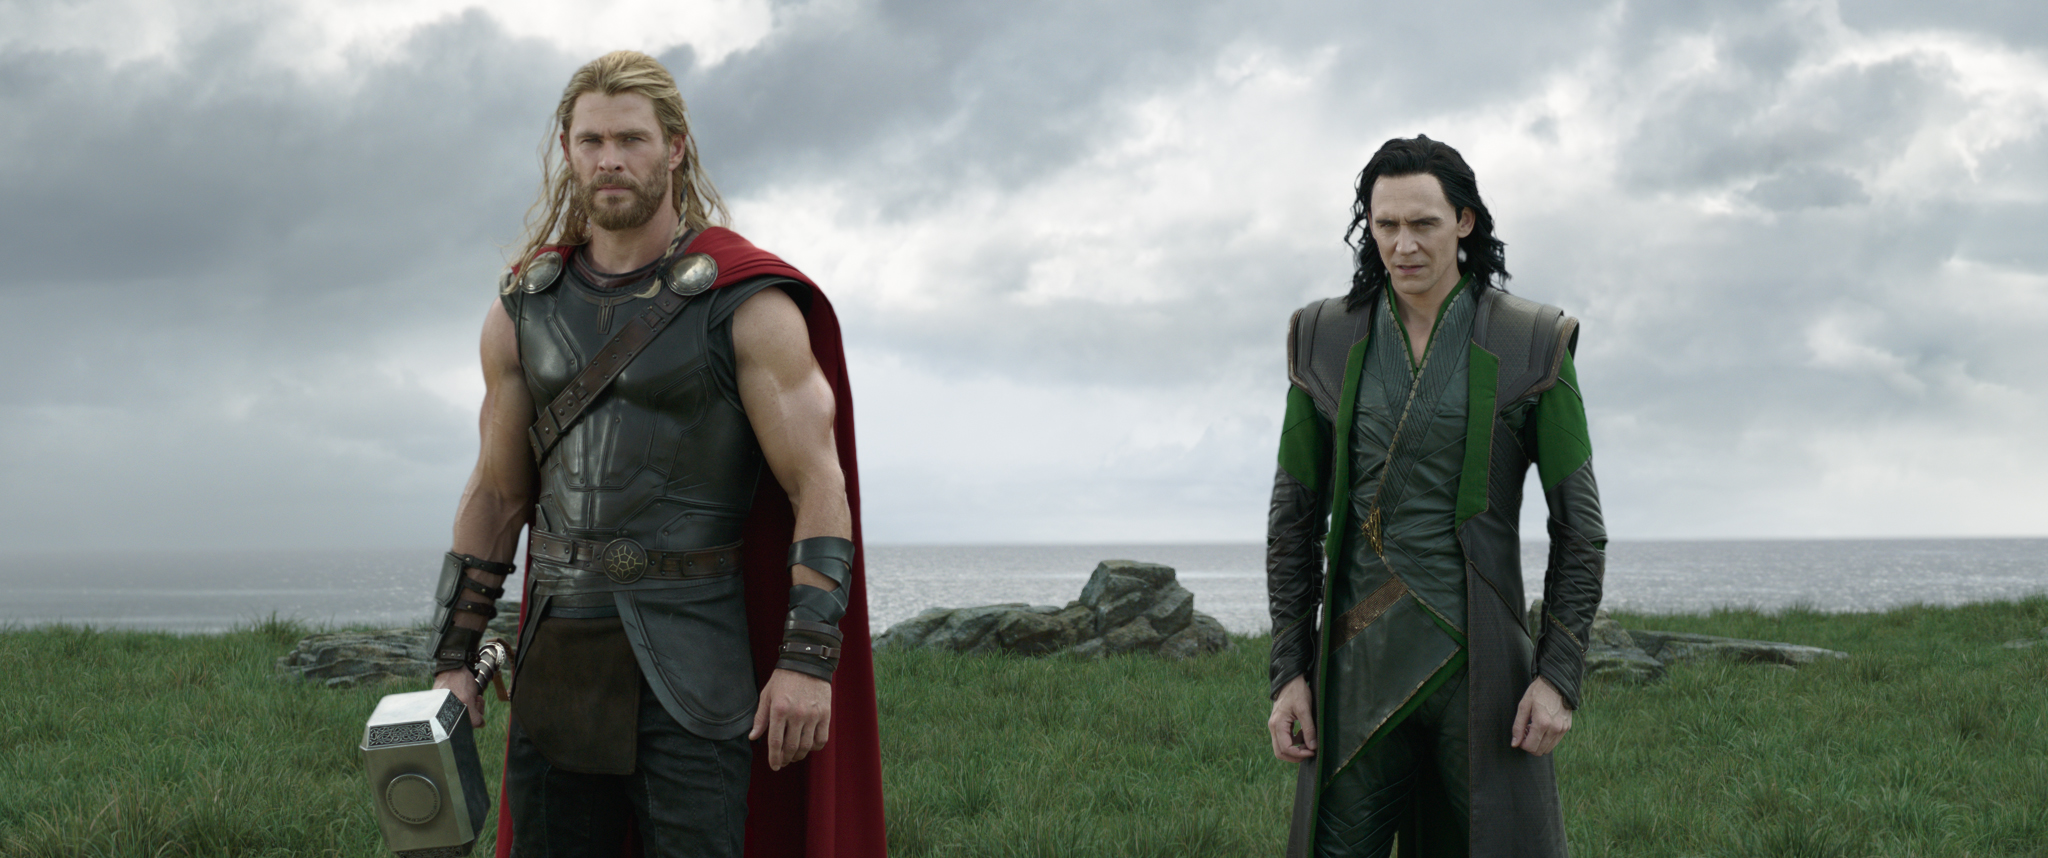 Thor: Ragnarok – Home Entertainment Review by Mr. DAPs